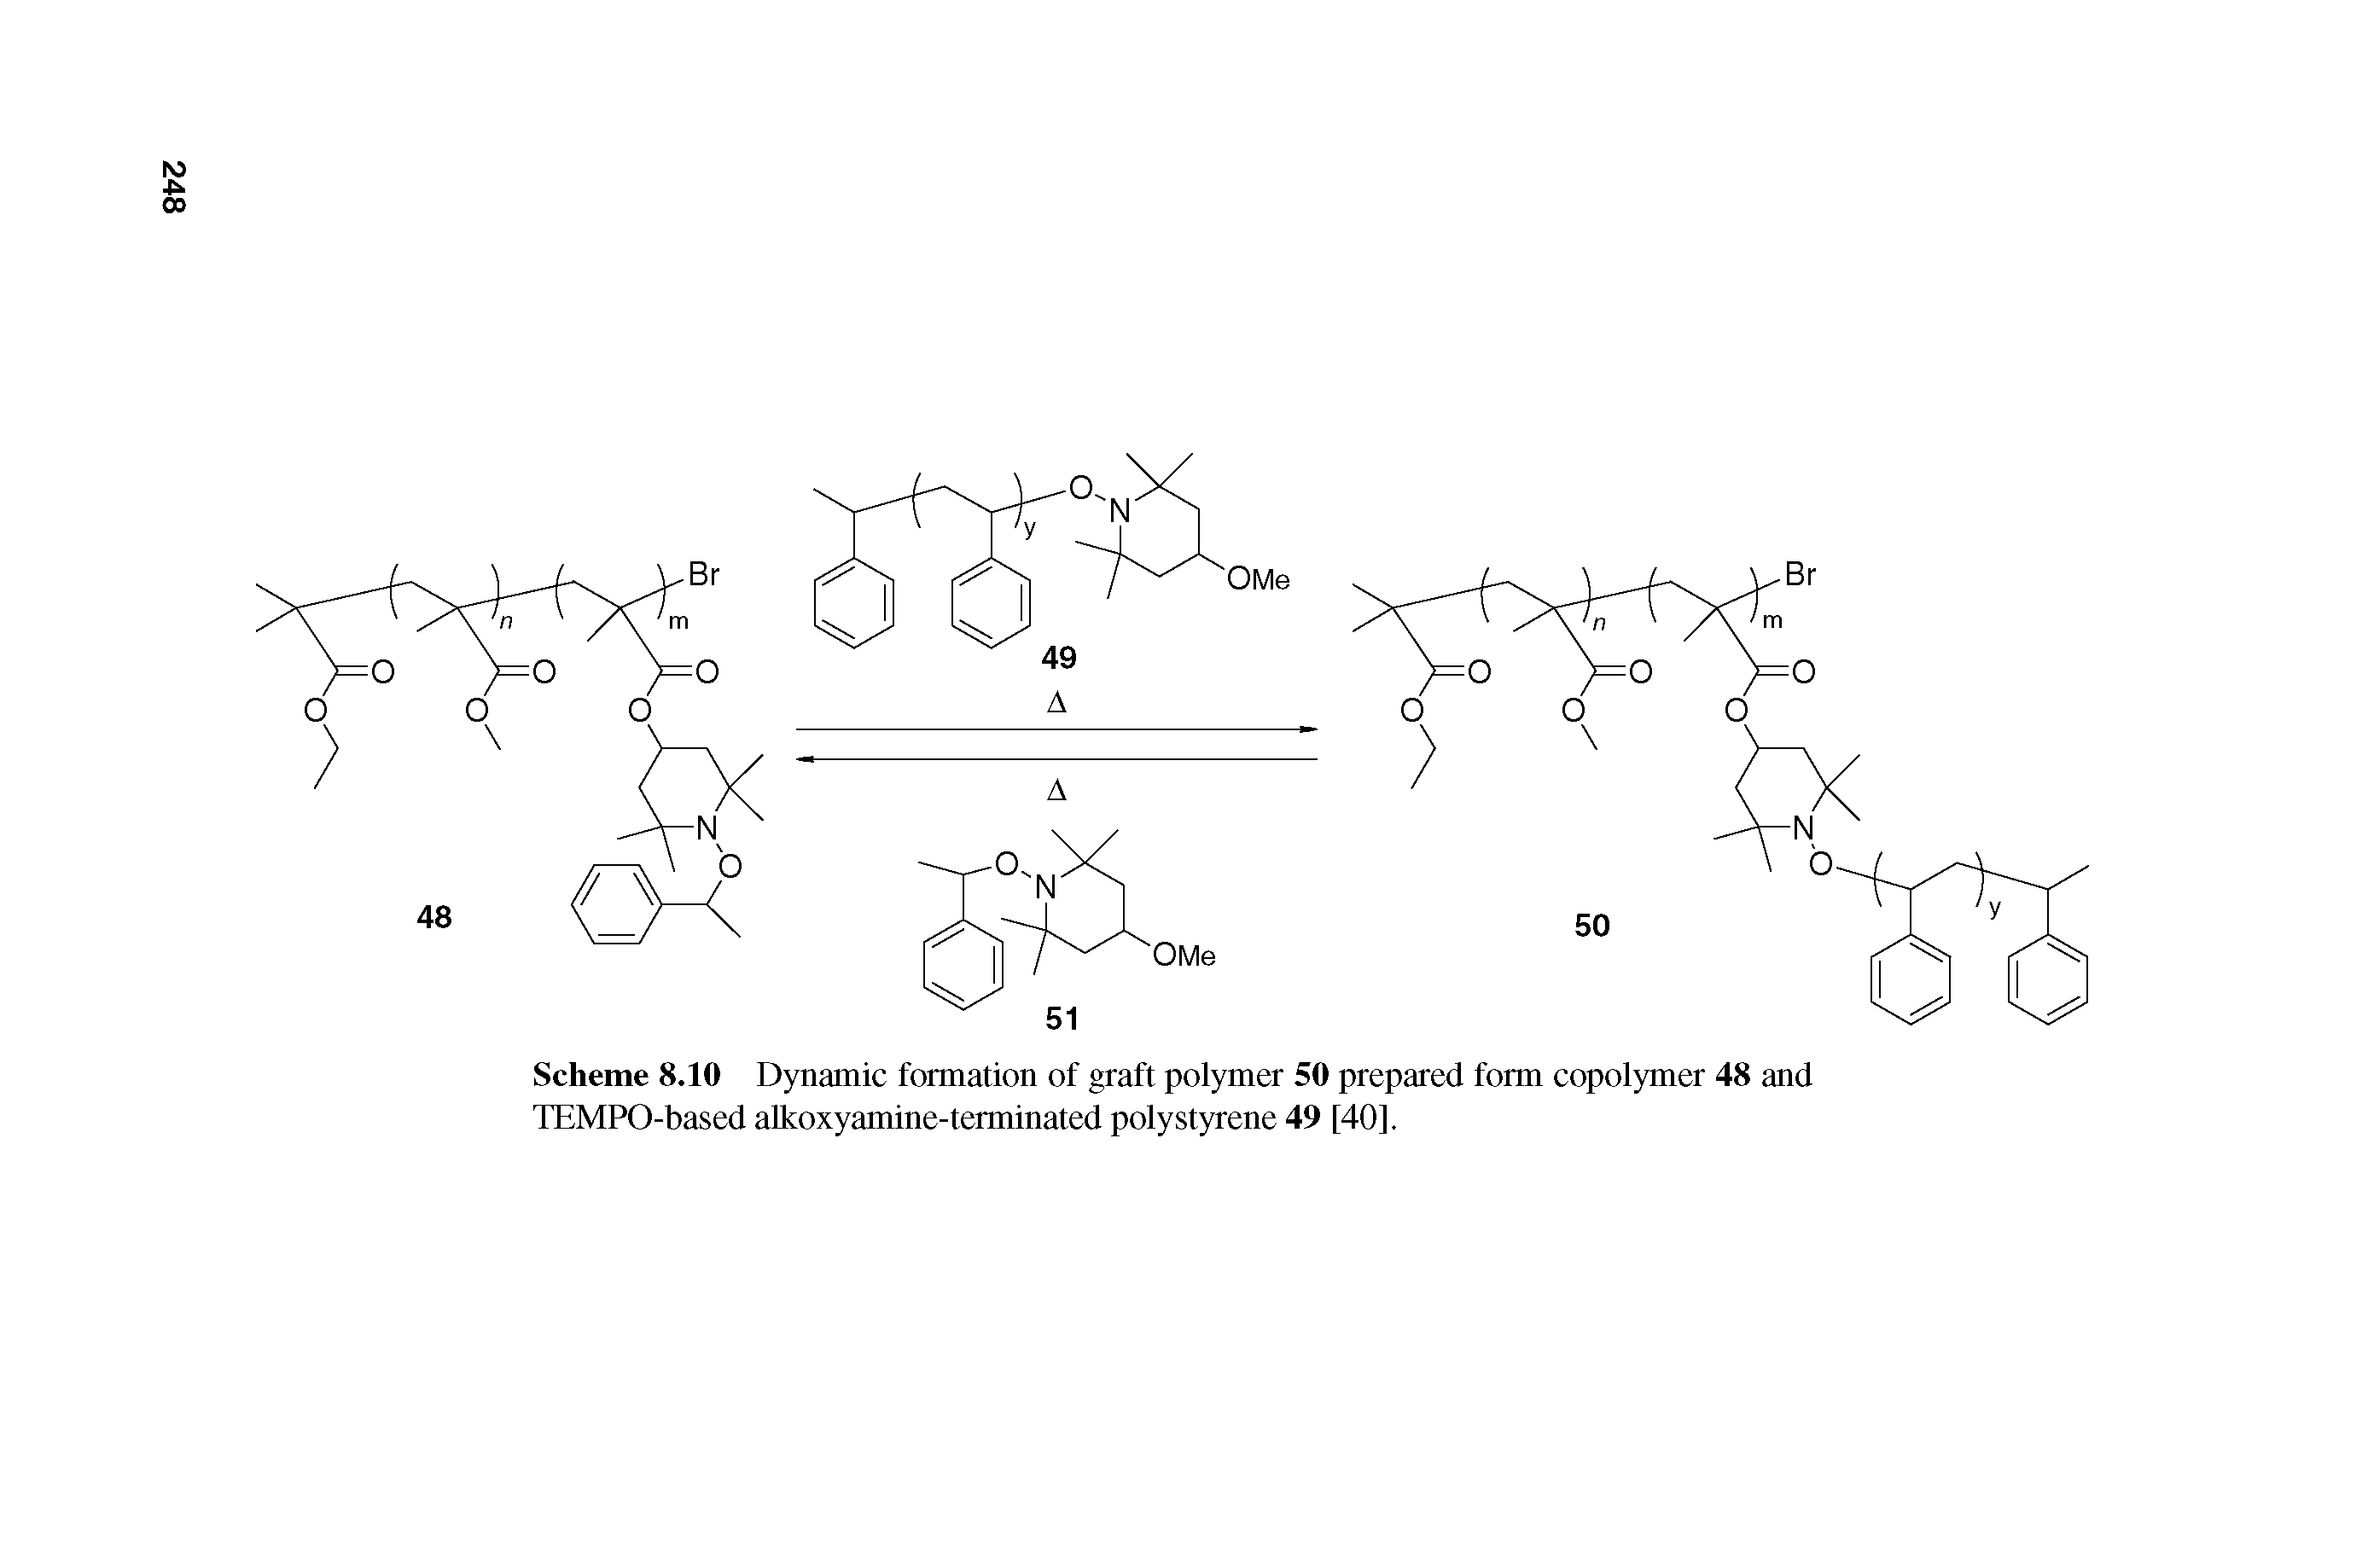 Scheme 8.10 Dynamic formation of graft polymer 50 prepared form copolymer 48 and TEMPO-based alkoxyamine-terminated polystyrene 49 [40].